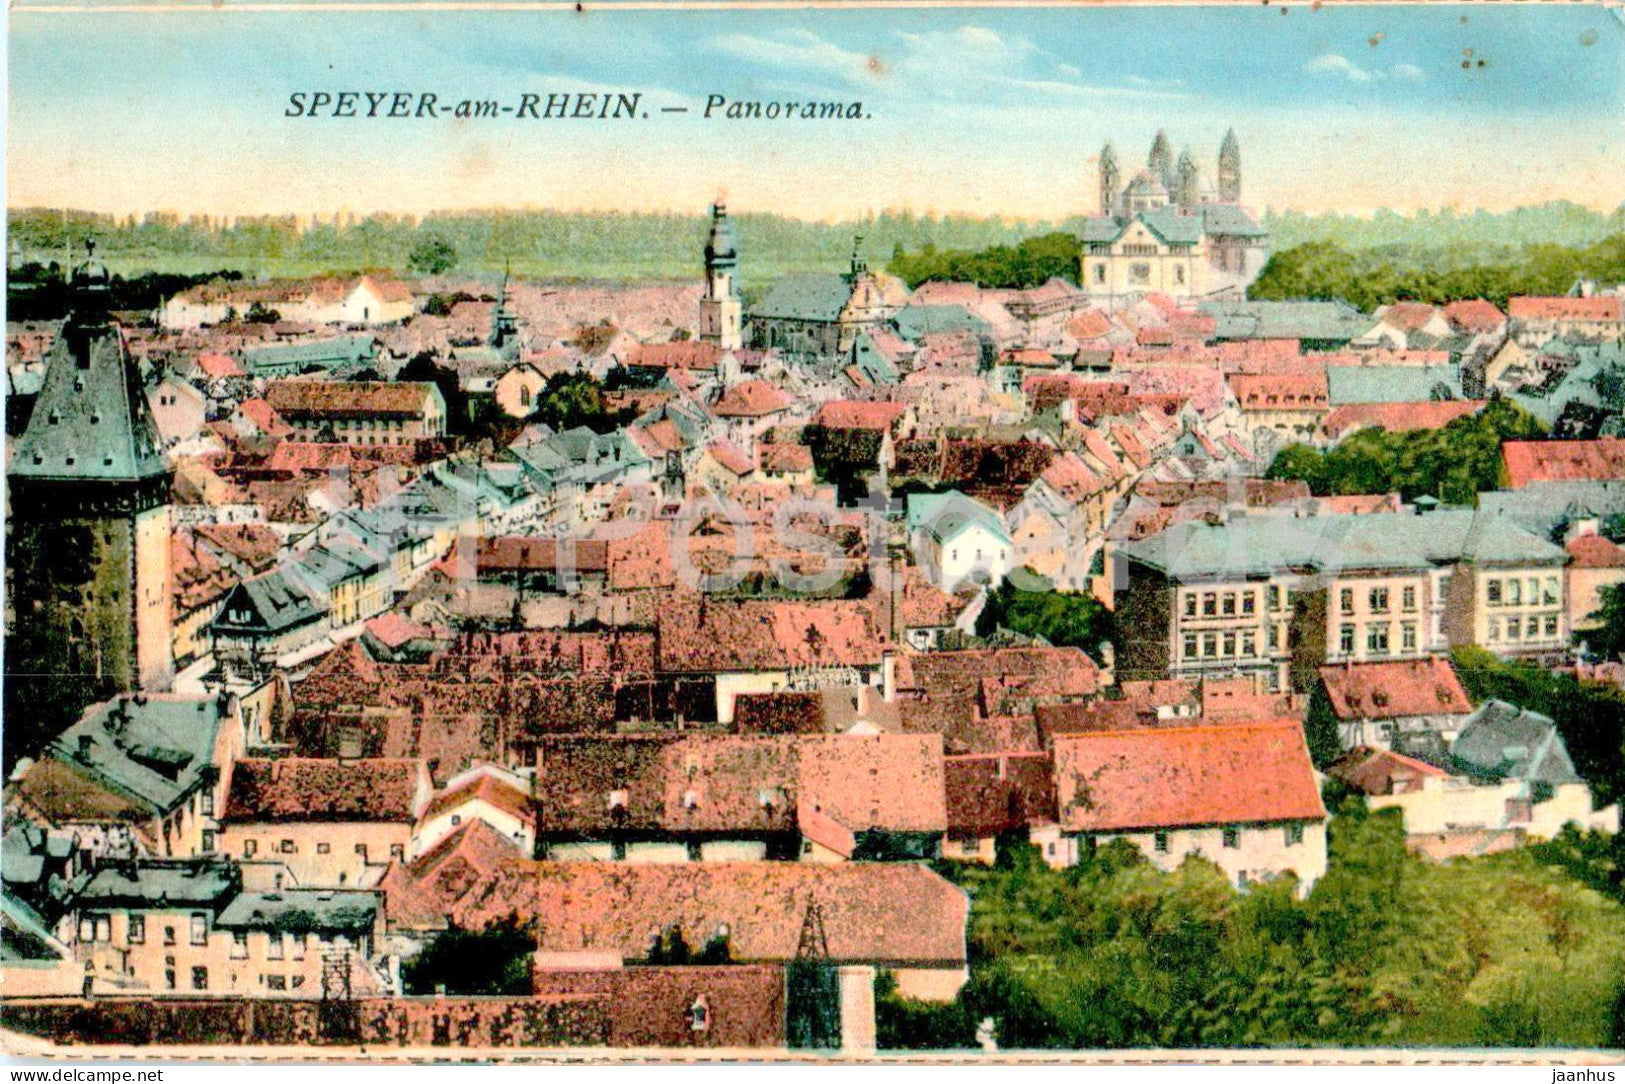 Speyer am Rhein - Panorama - old postcard - 1926 - Germany - used - JH Postcards